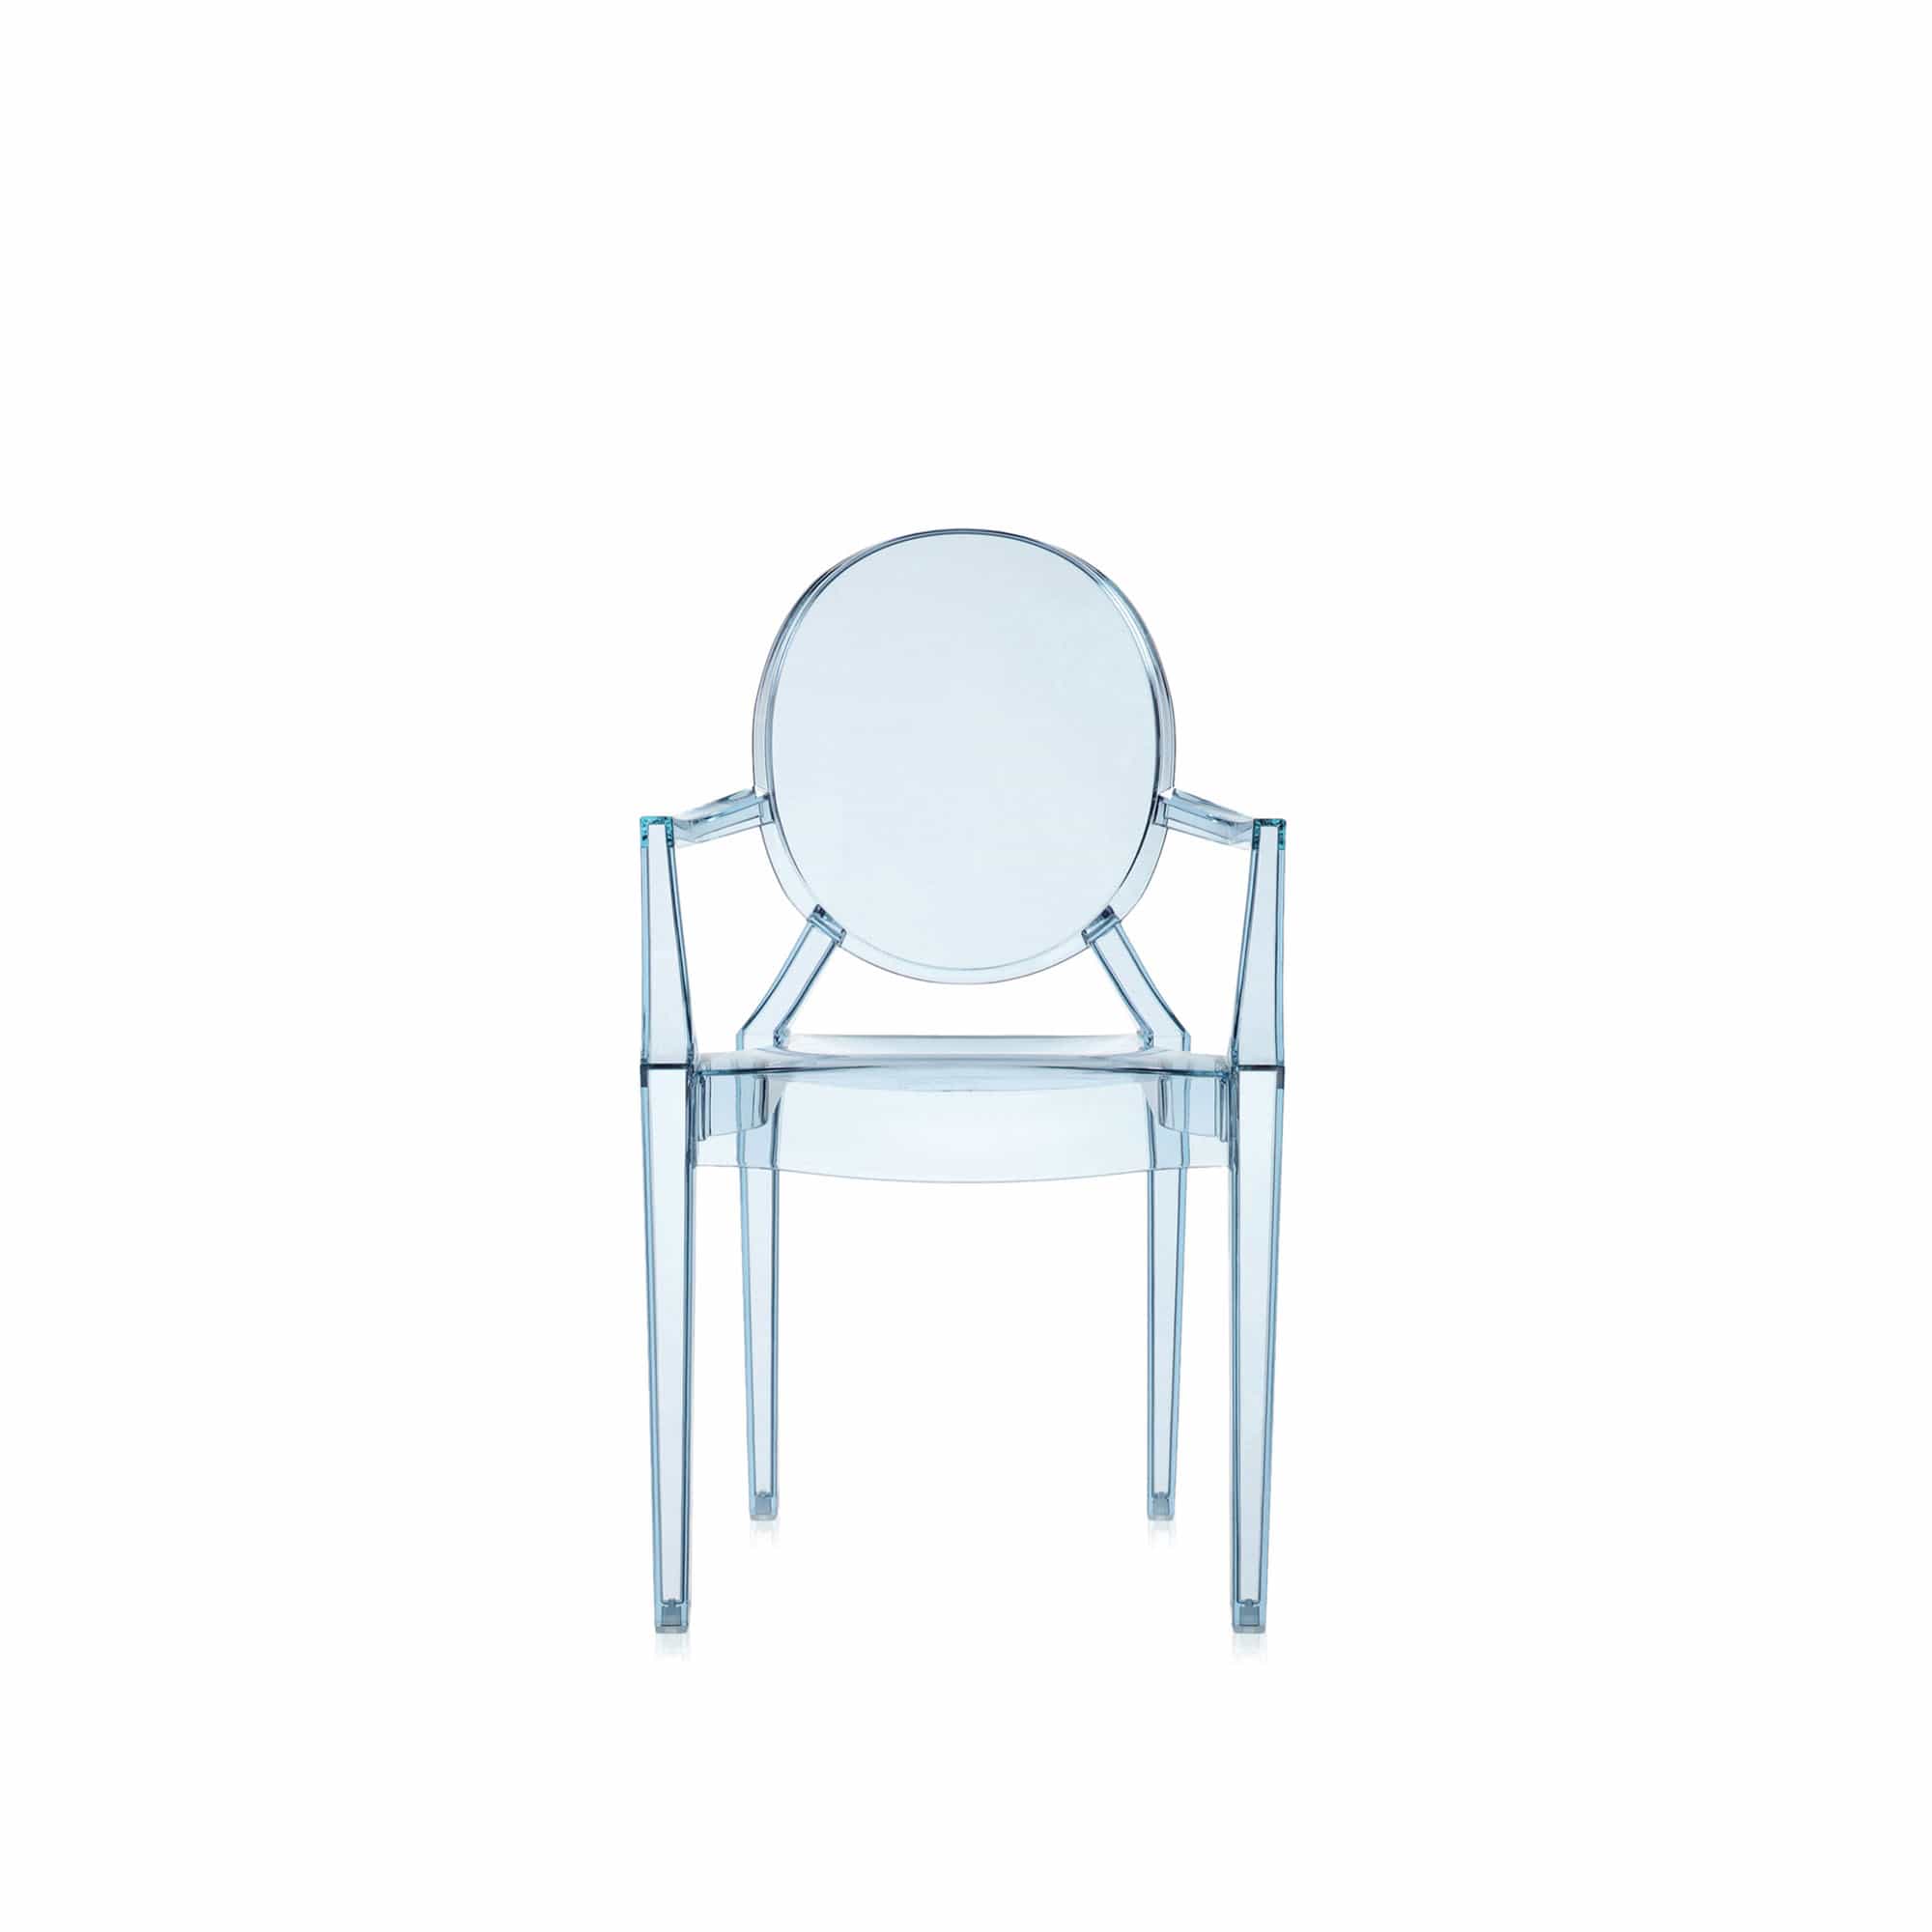 Lou Lou Ghost Chair - Barnstol